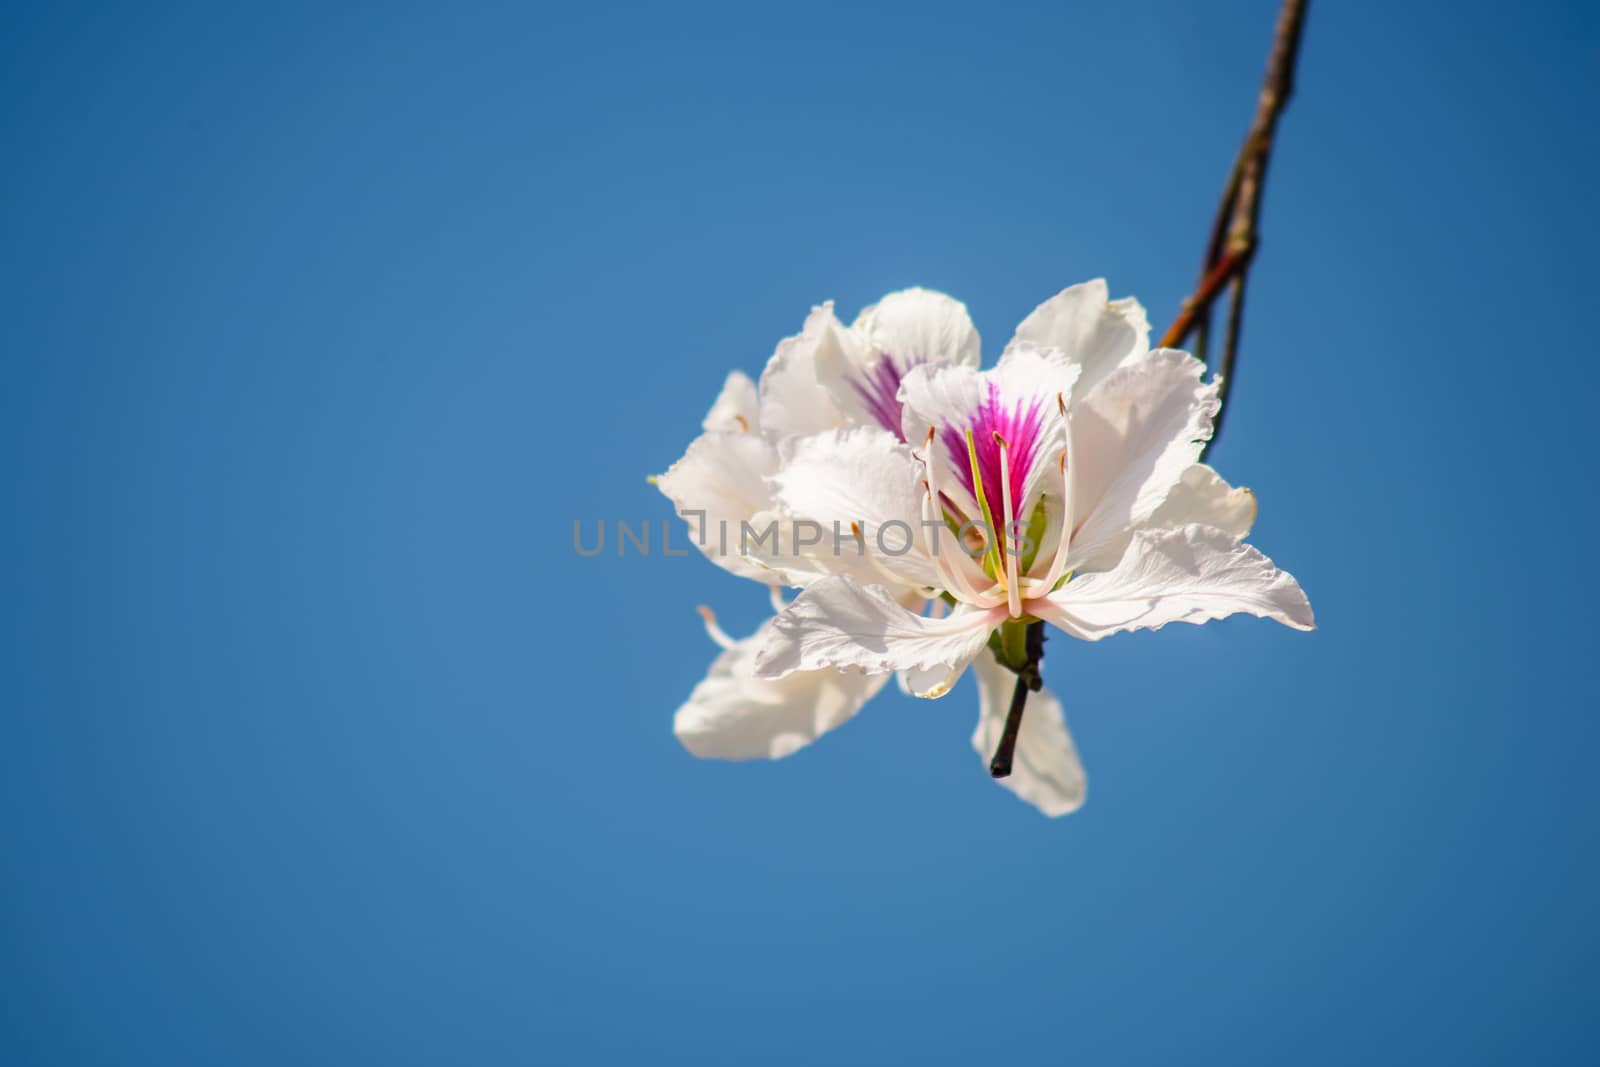 Bautiful white flower this name Bauhinia variegata by NuwatPhoto